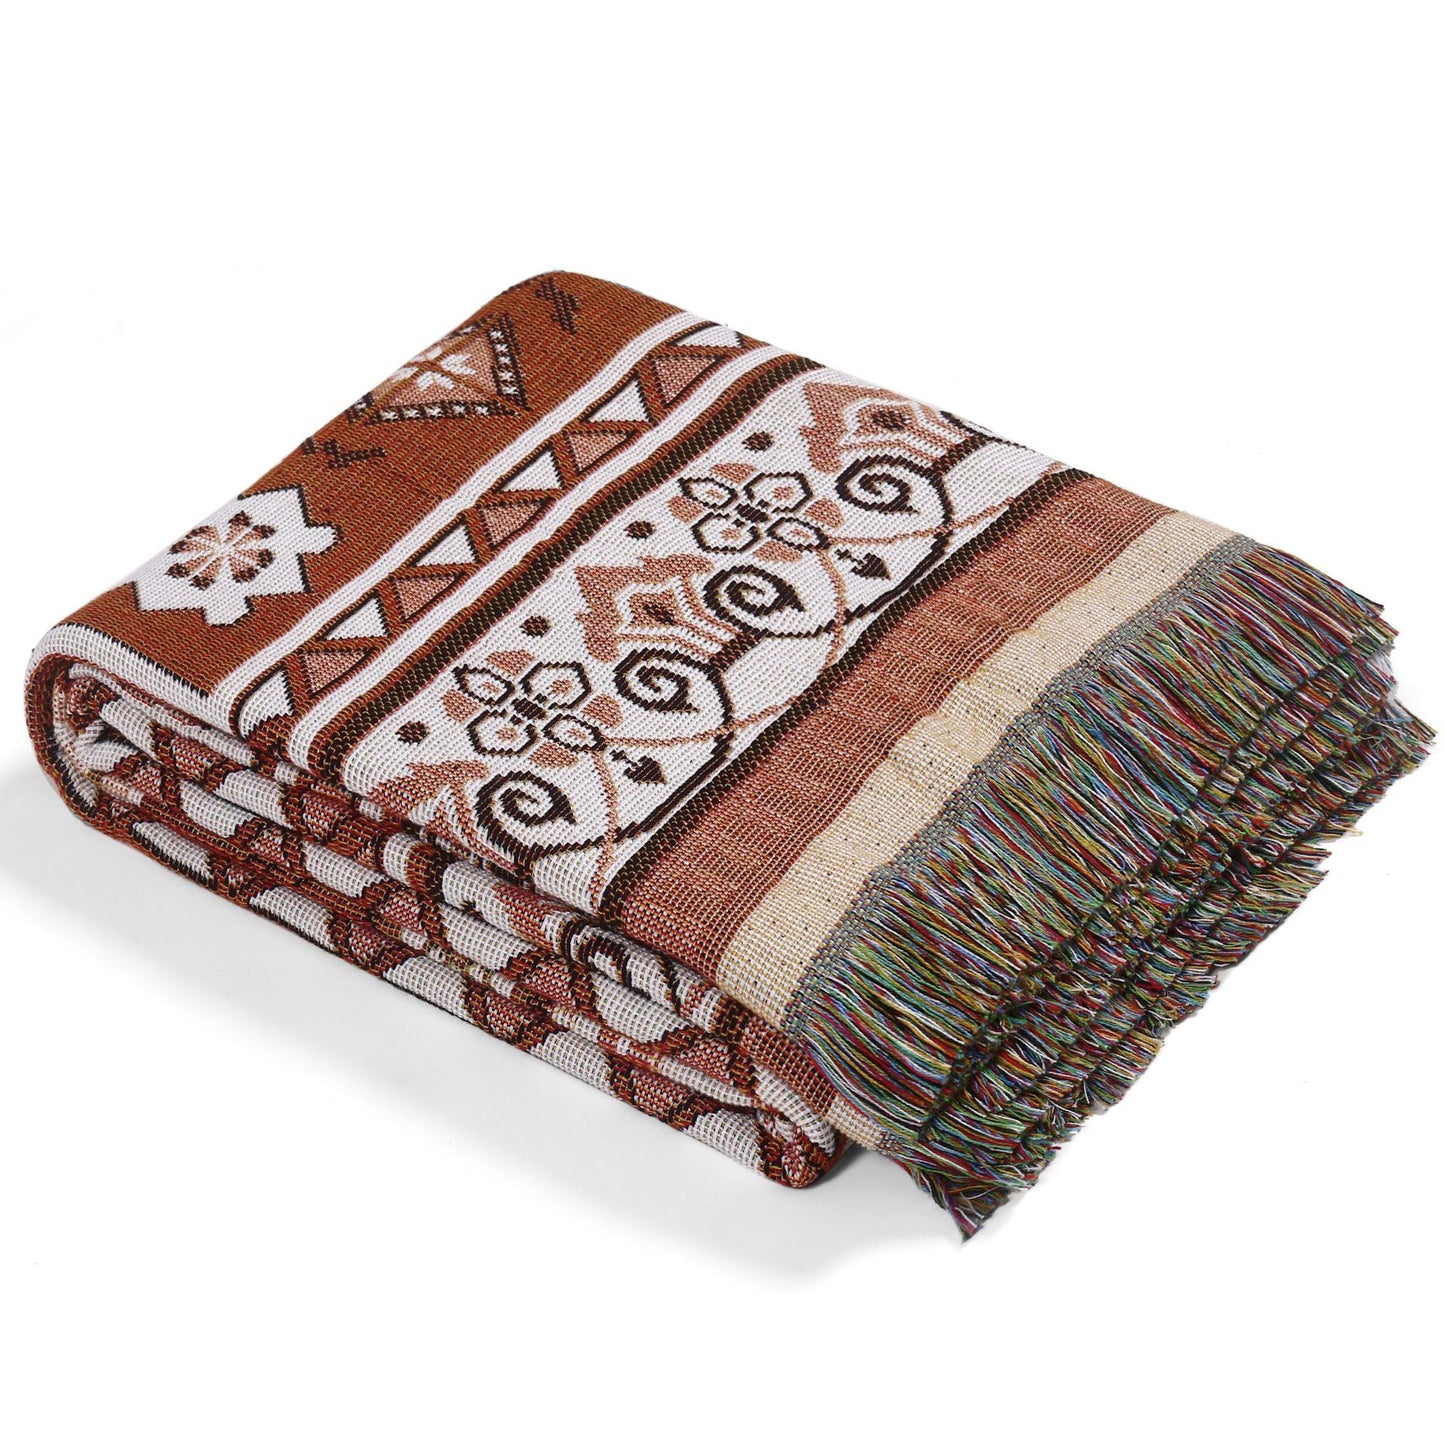 BoHo Woven Throw Blanket | Picnic Blanket | Beach Throw |Travel Blanket